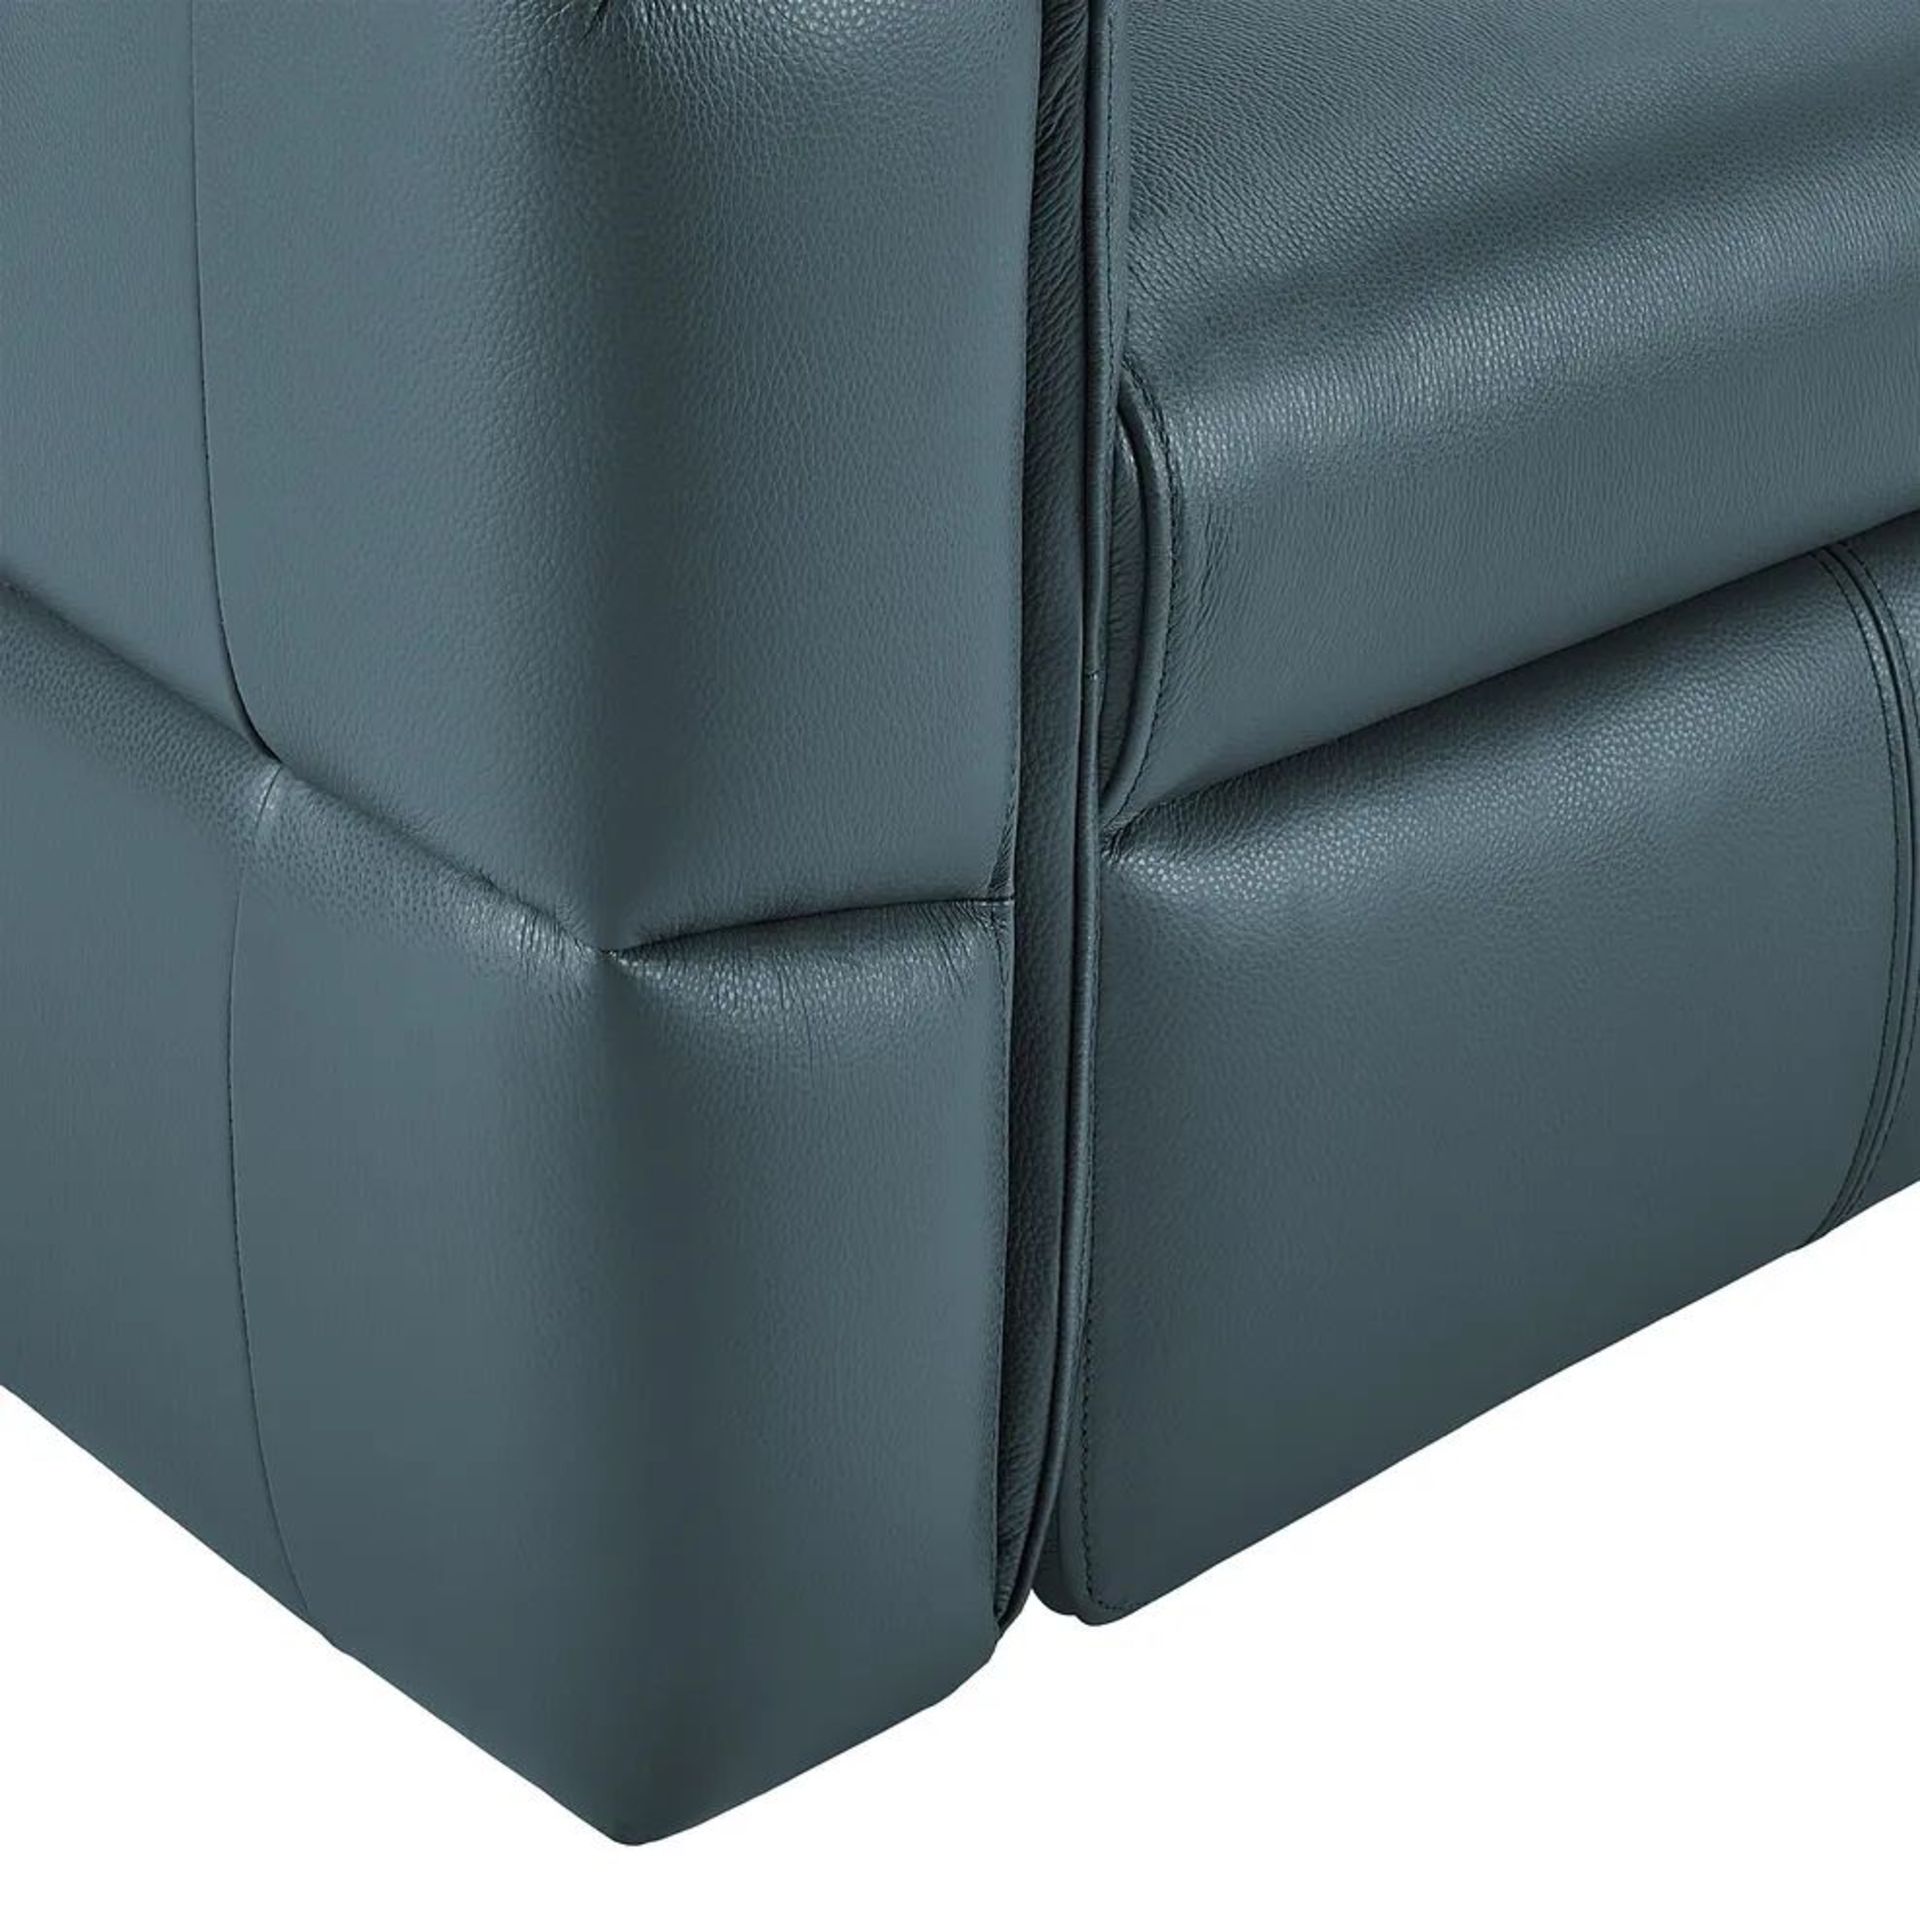 BRAND NEW SAMSON Modular 3 Seat Static Sofa -LIGHT BLUE LEATHER. RRP £1750. Showcasing neat, - Image 5 of 5